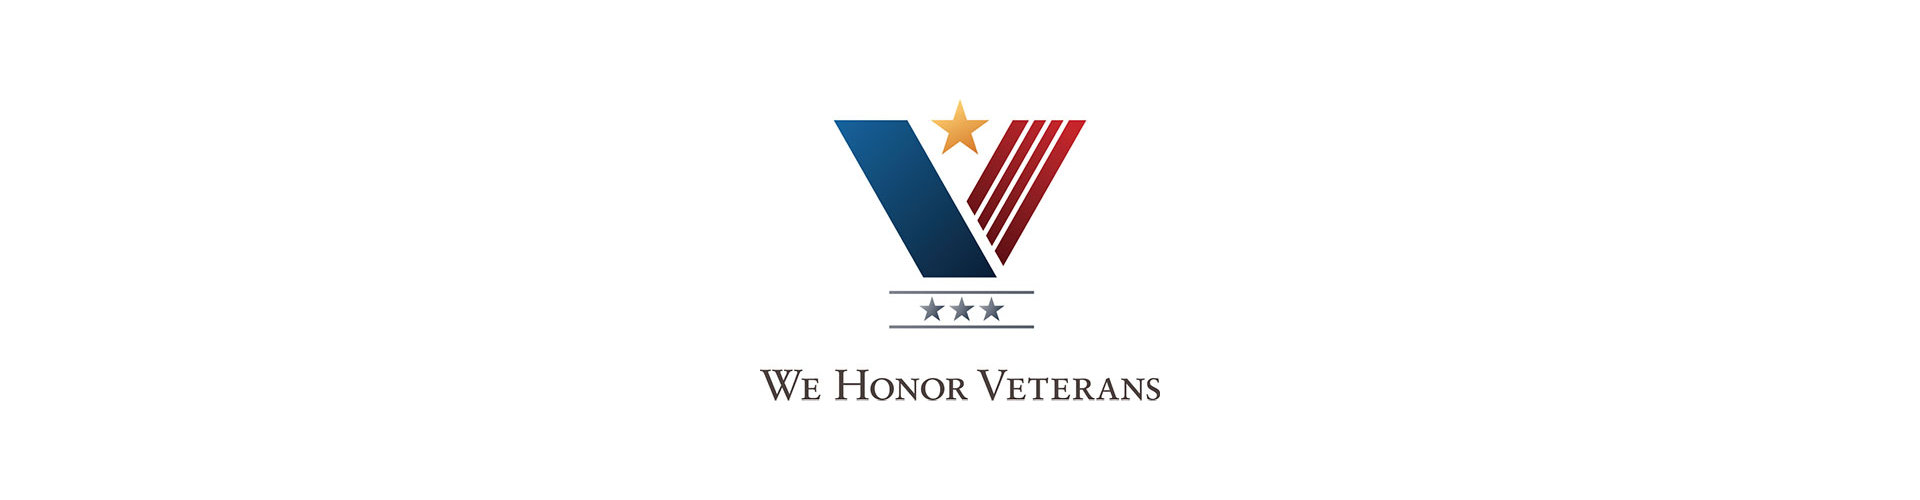 we honor veterans logo